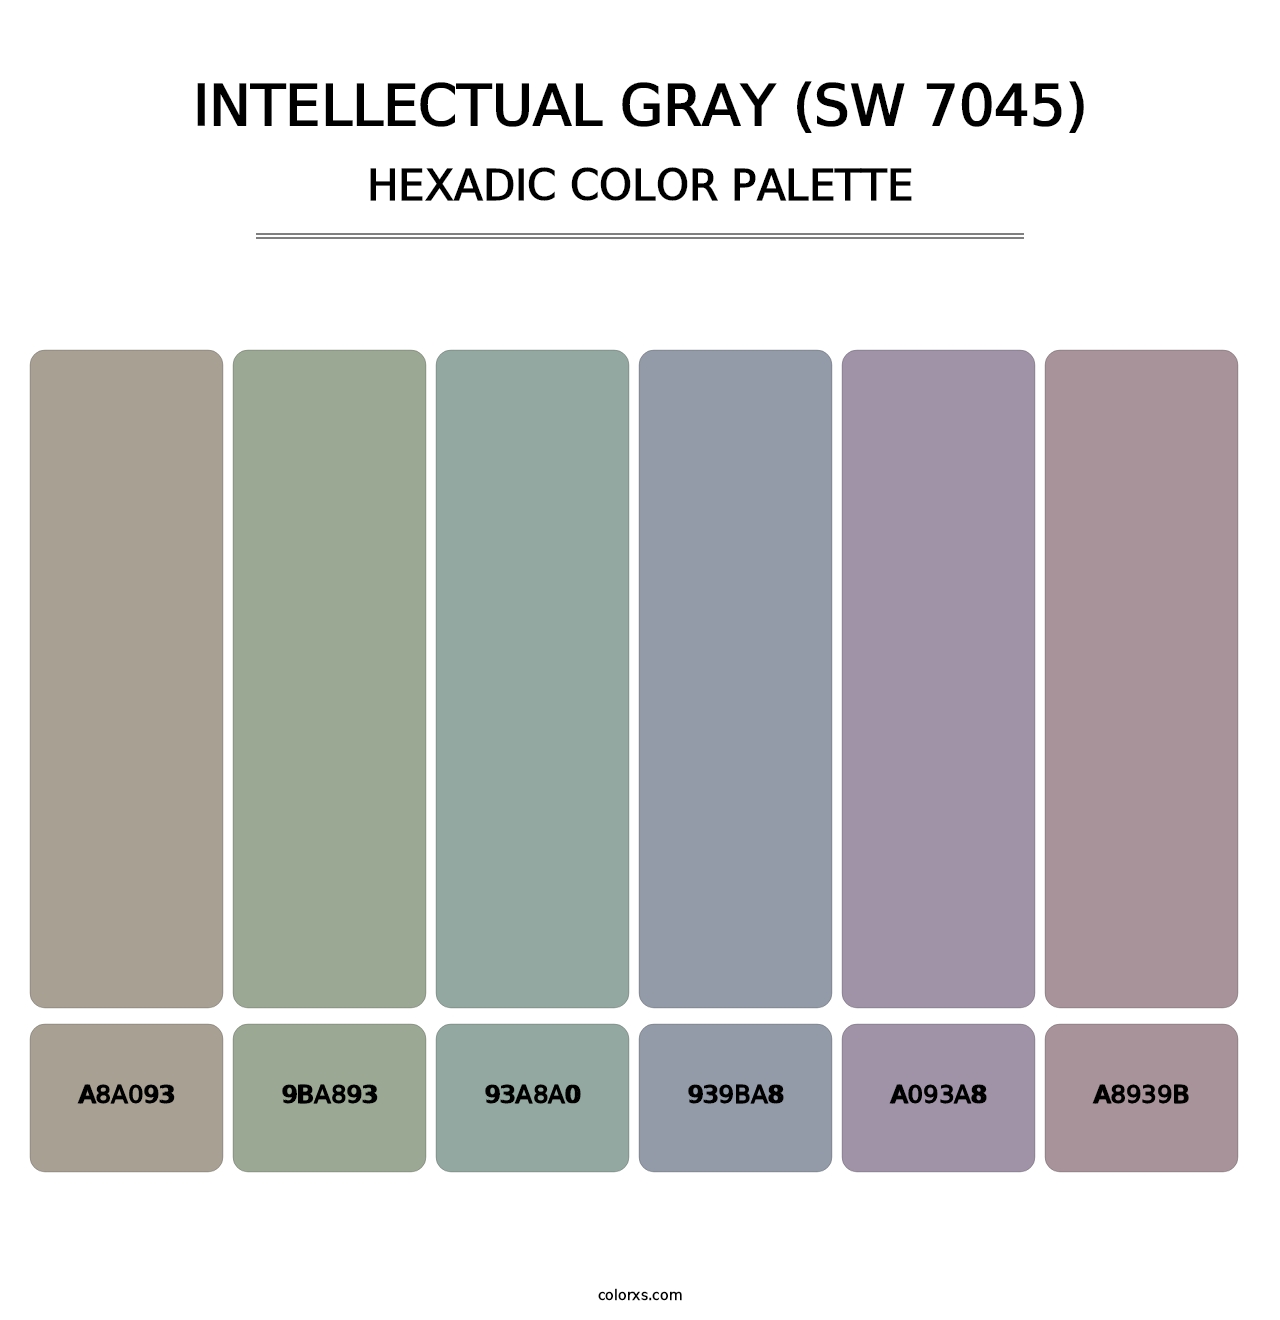 Intellectual Gray (SW 7045) - Hexadic Color Palette